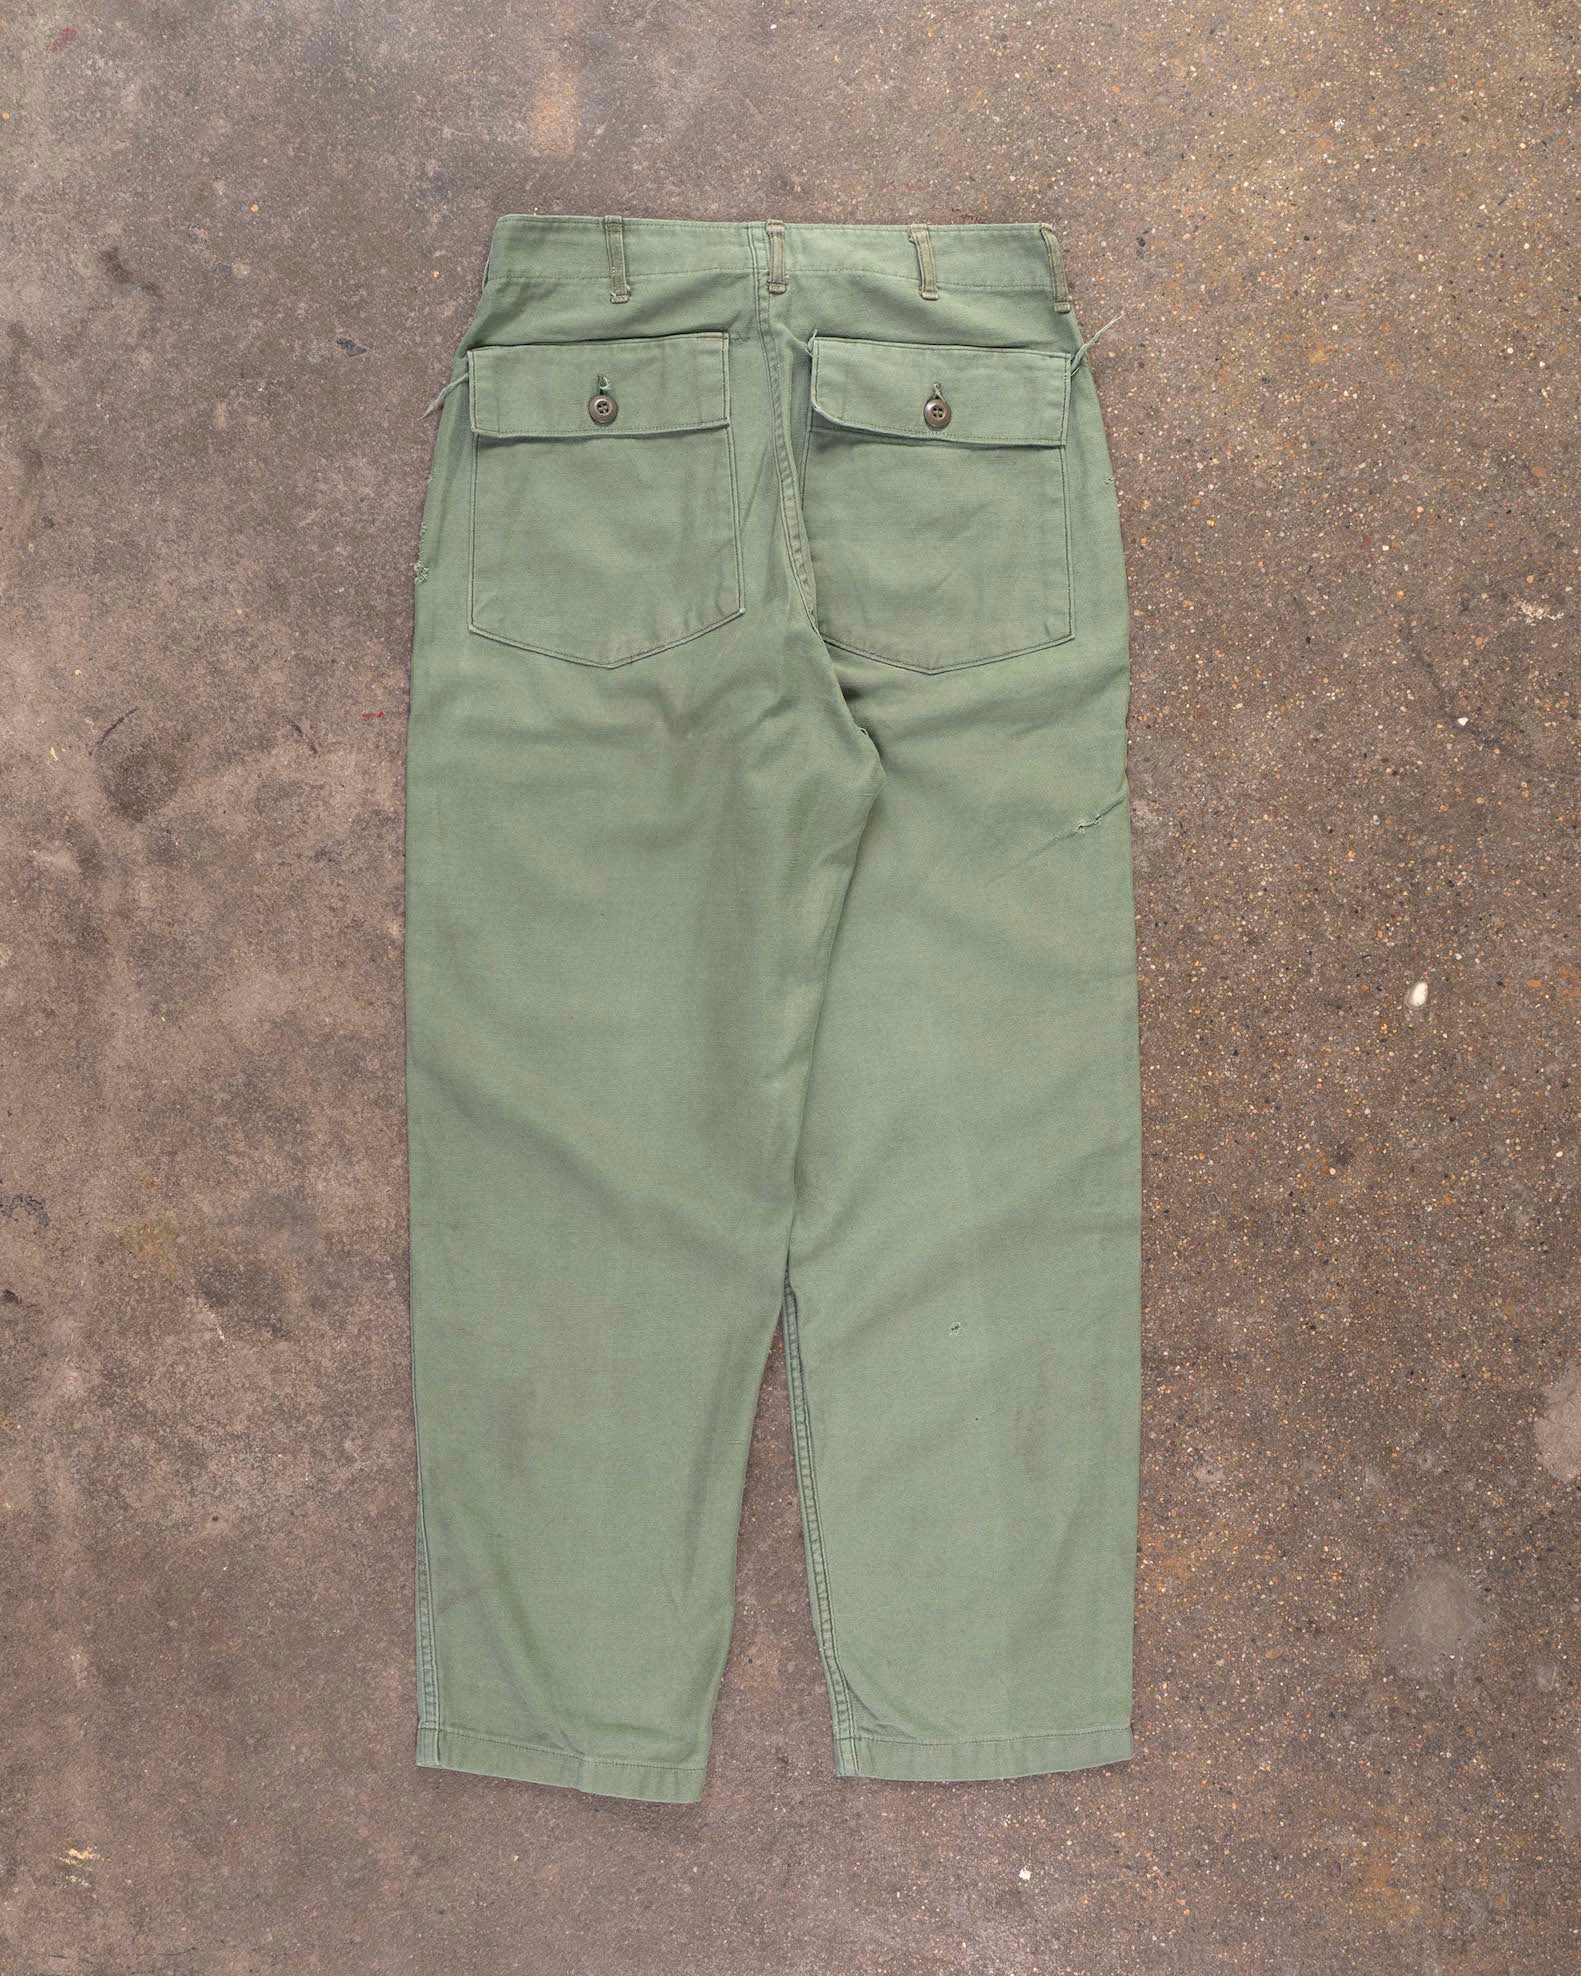 Online Vintage Store, 70's Khaki Green Military Pants